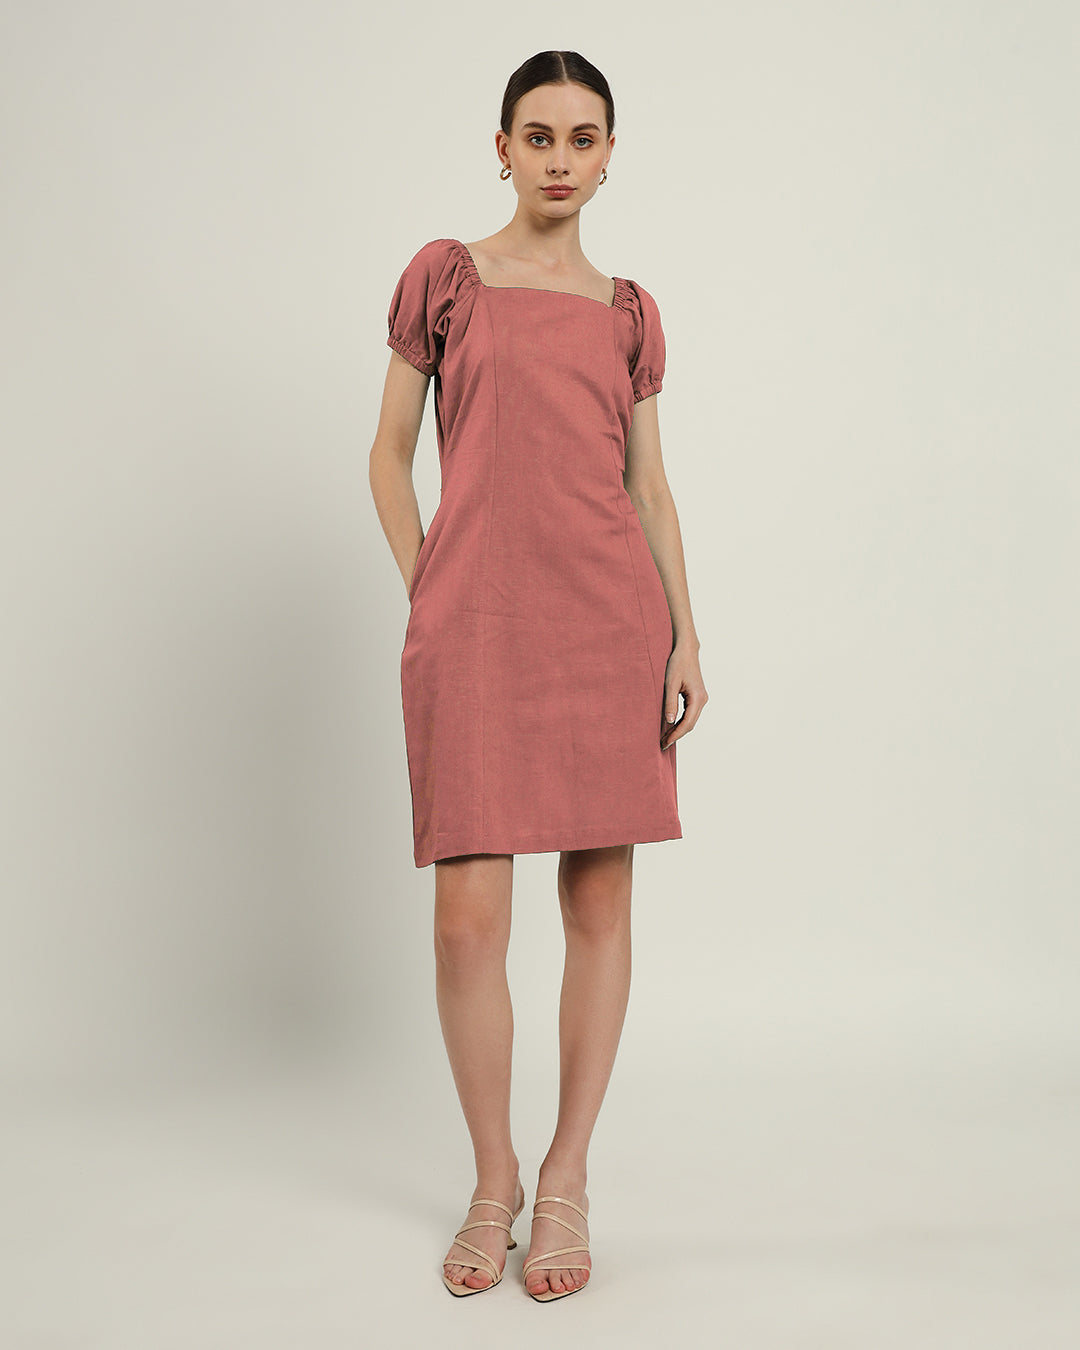 The Arar Ivory Pink Cotton Dress